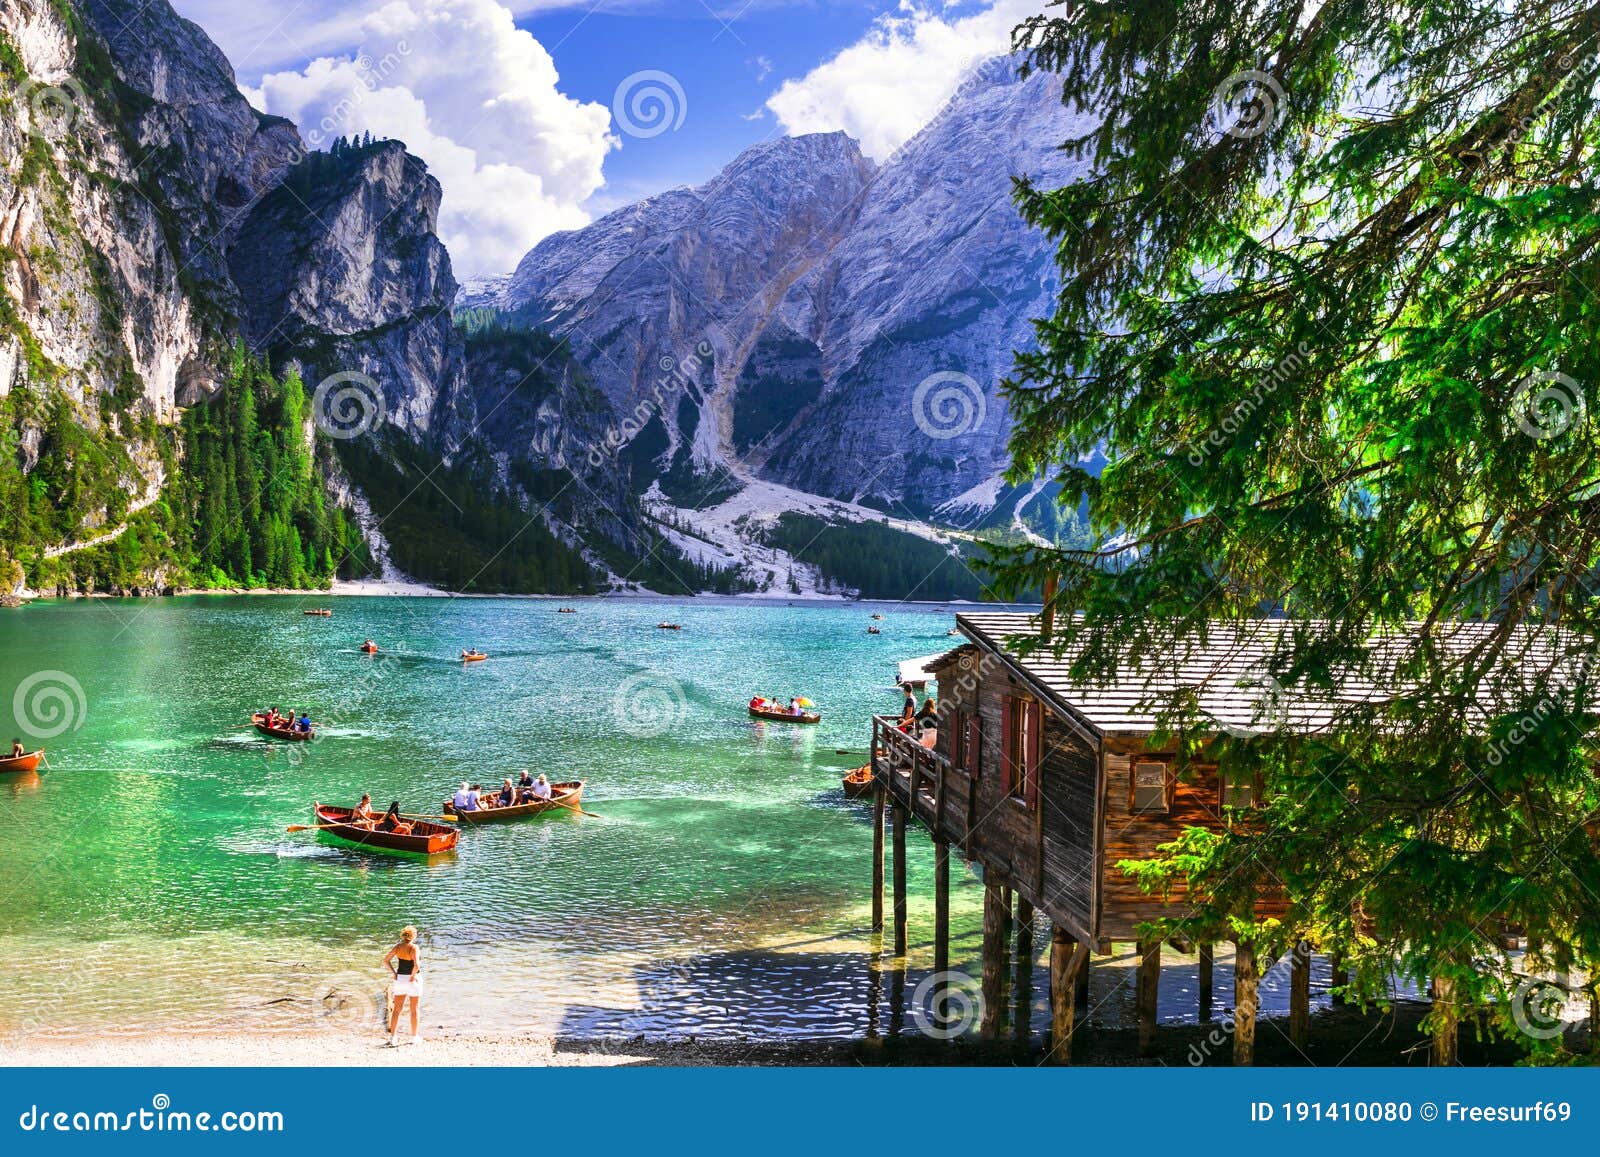 Dolomites Mountains Lake Lago Di Braiesitaly Editorial Image Image